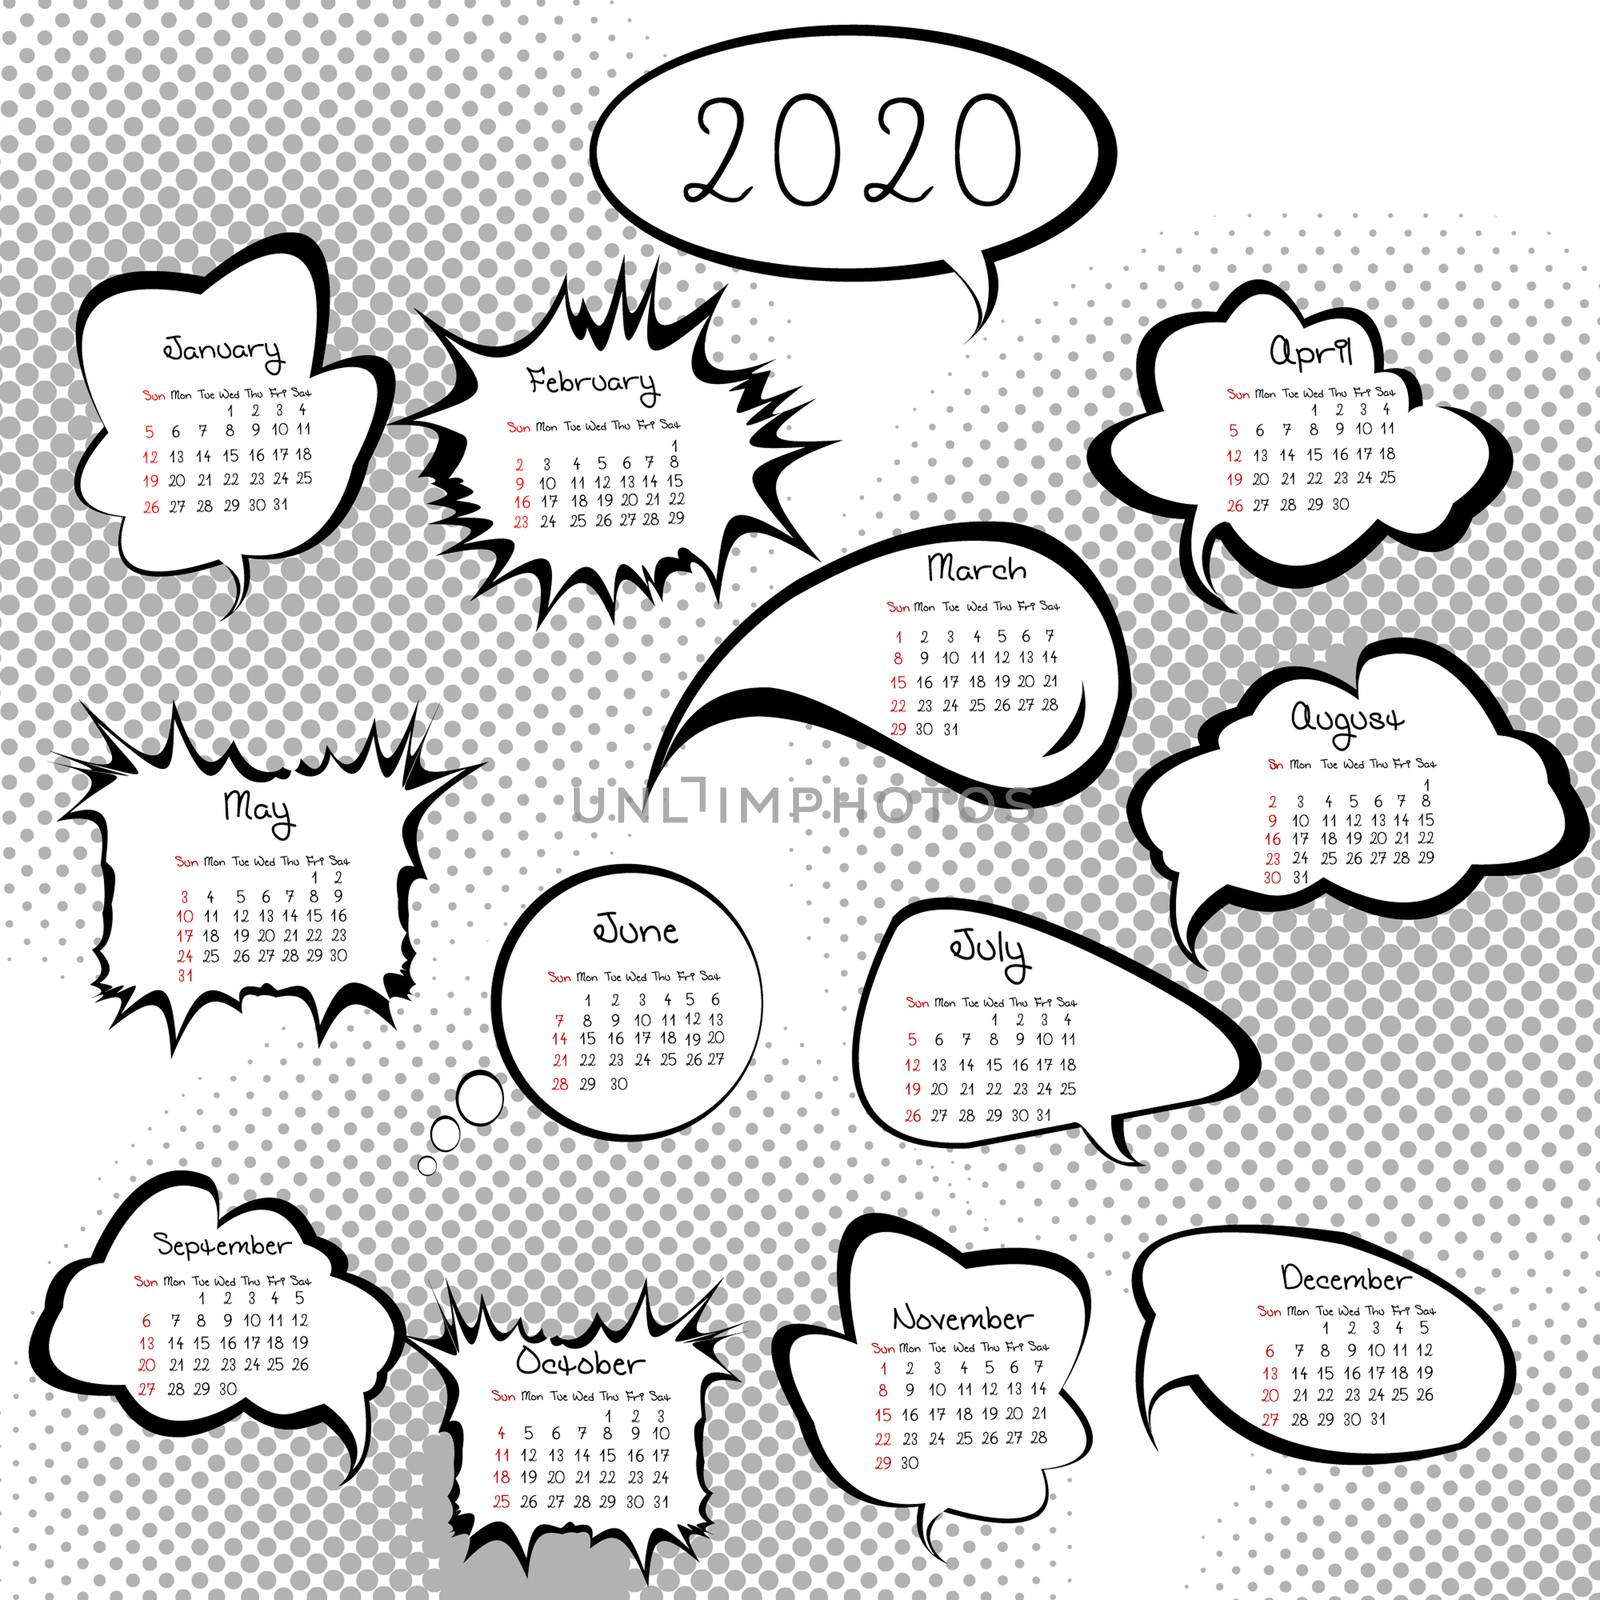 2020 calendar with speech bubbles by hibrida13